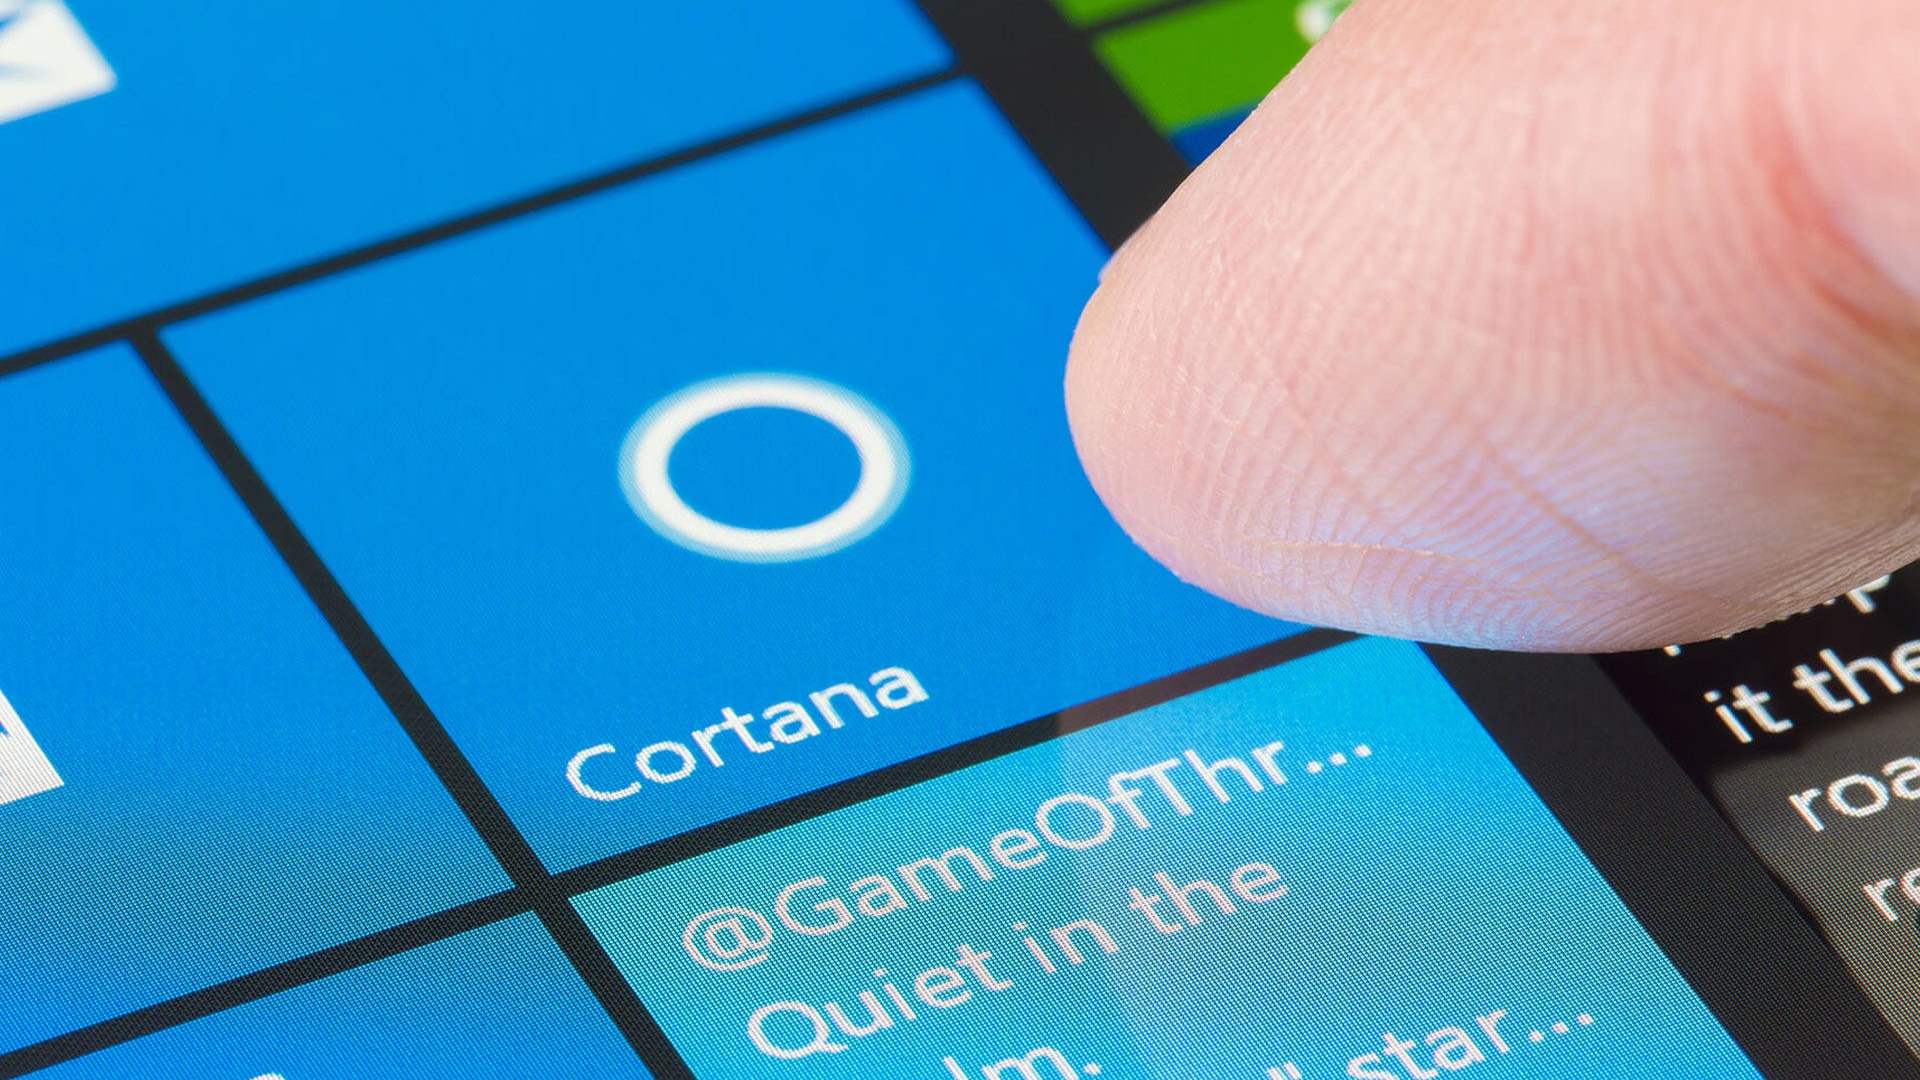 Microsoft kills Cortana in Windows as it focuses on next-gen AI